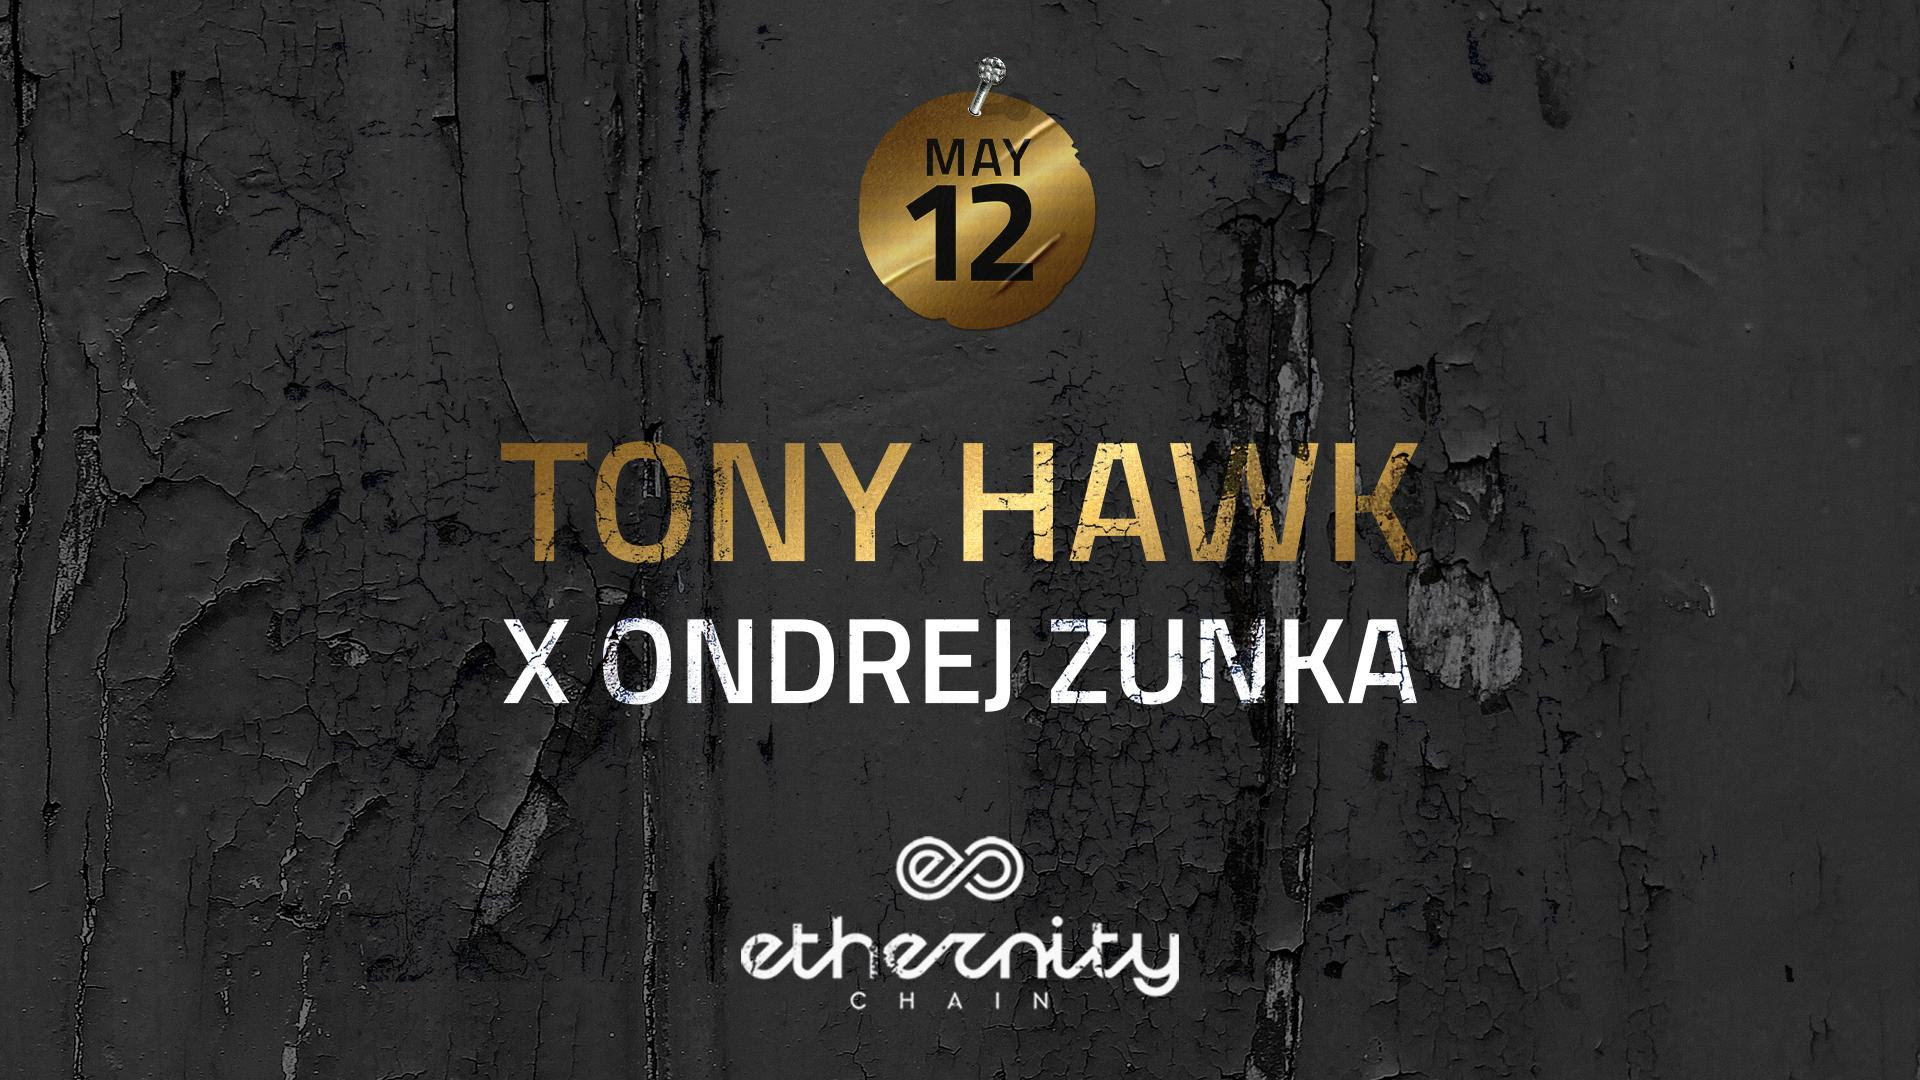 Ethernity Chain Memorializes Tony Hawk’s Latest 540 Skate Trick With NFT